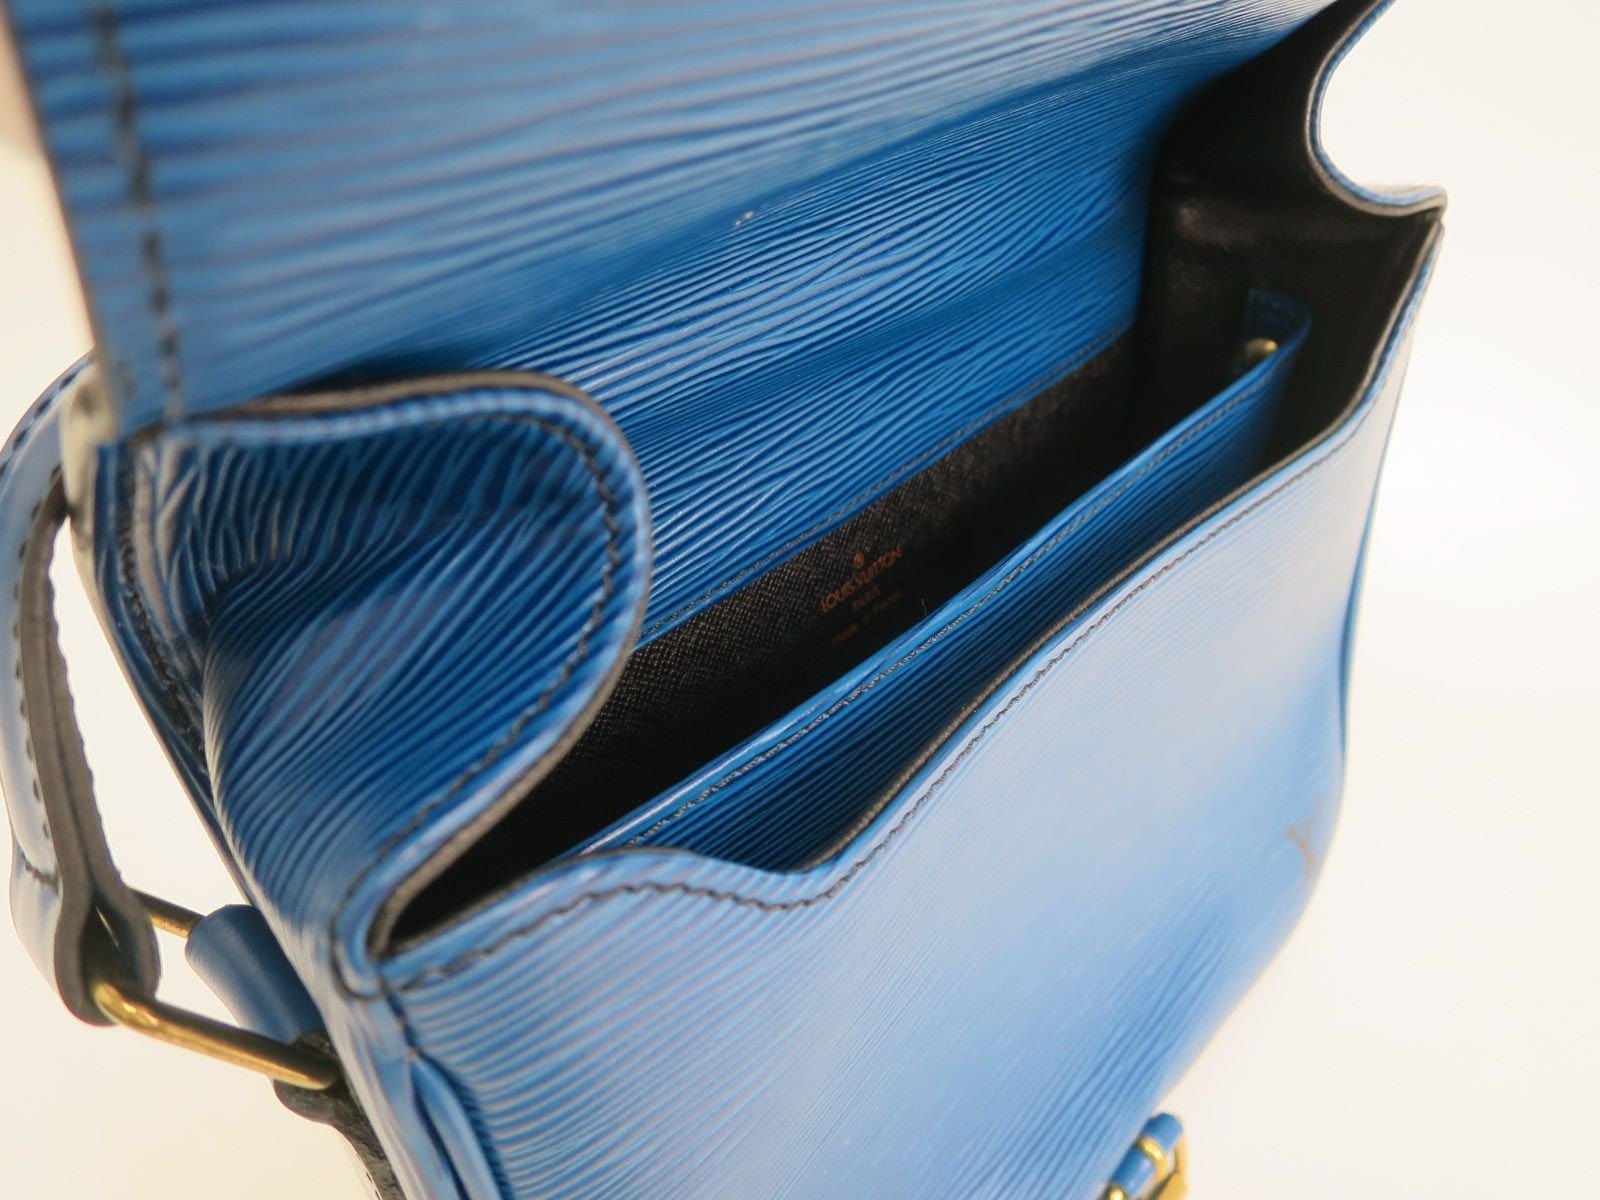 LOUIS VUITTON Toledo Blue Epi Leather Checkbook/Wallet - ShopperBoard